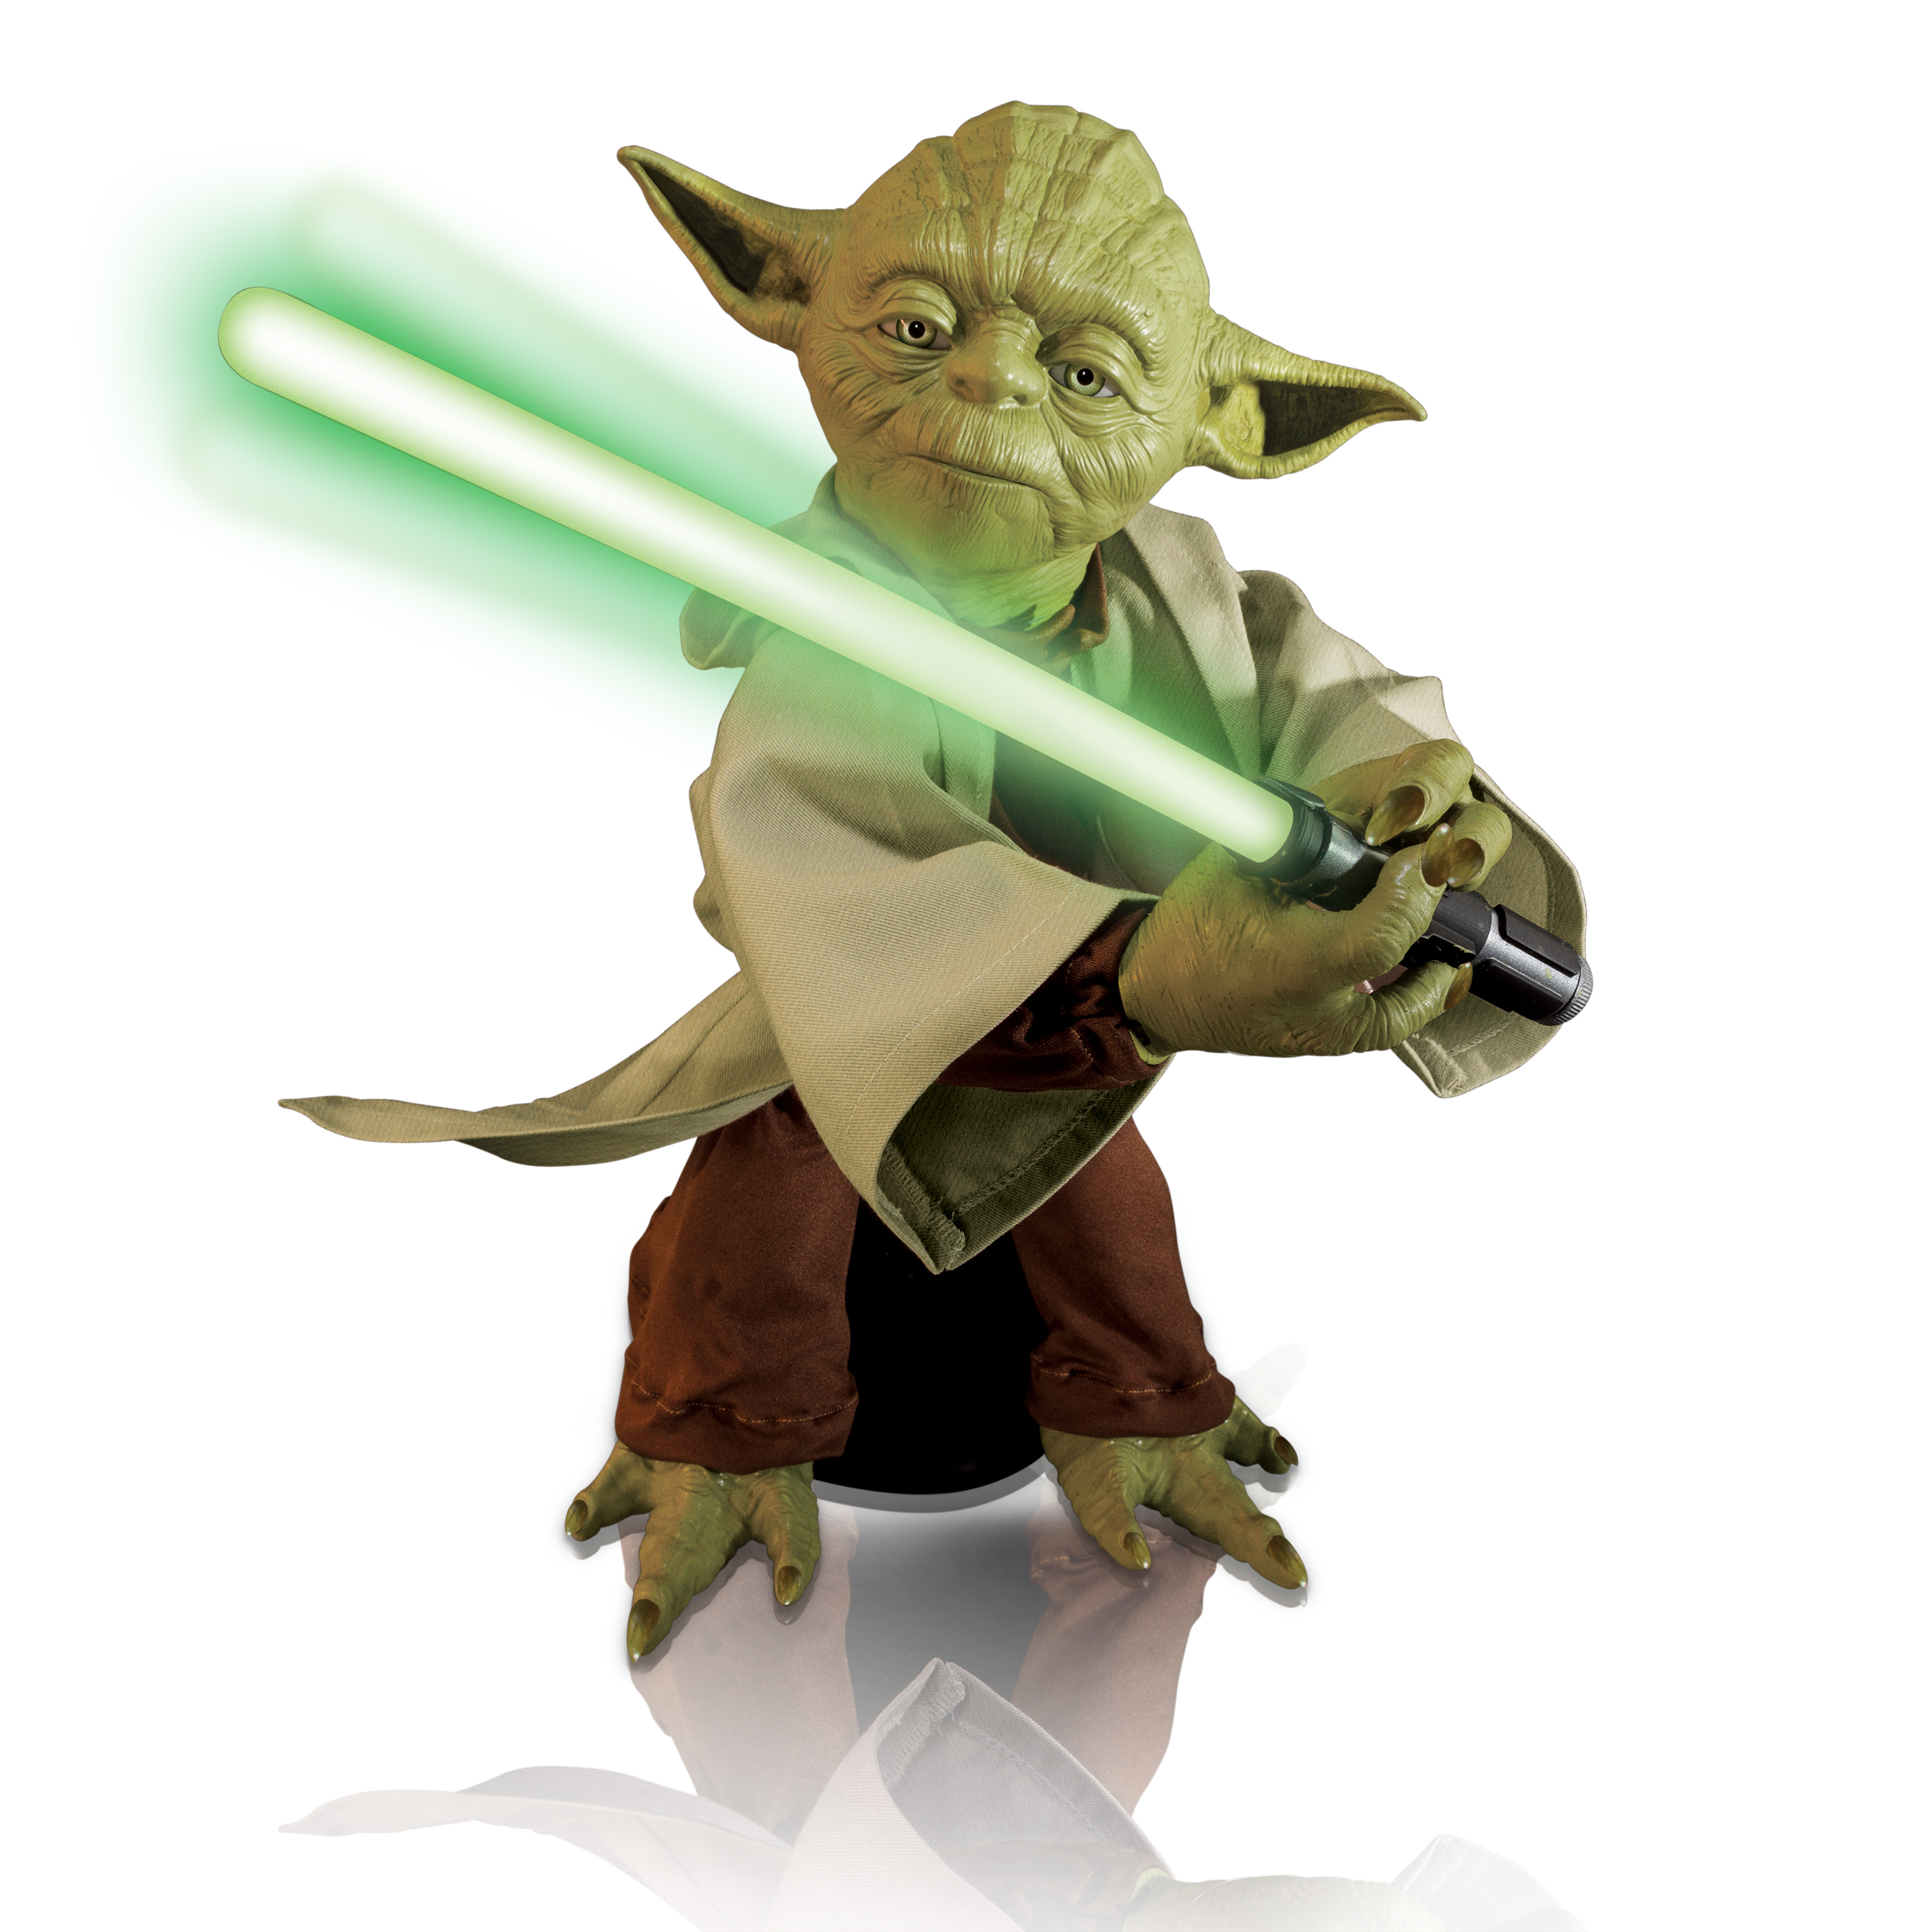 Star Wars Legendary Jedi Master Yoda - image 4 of 6